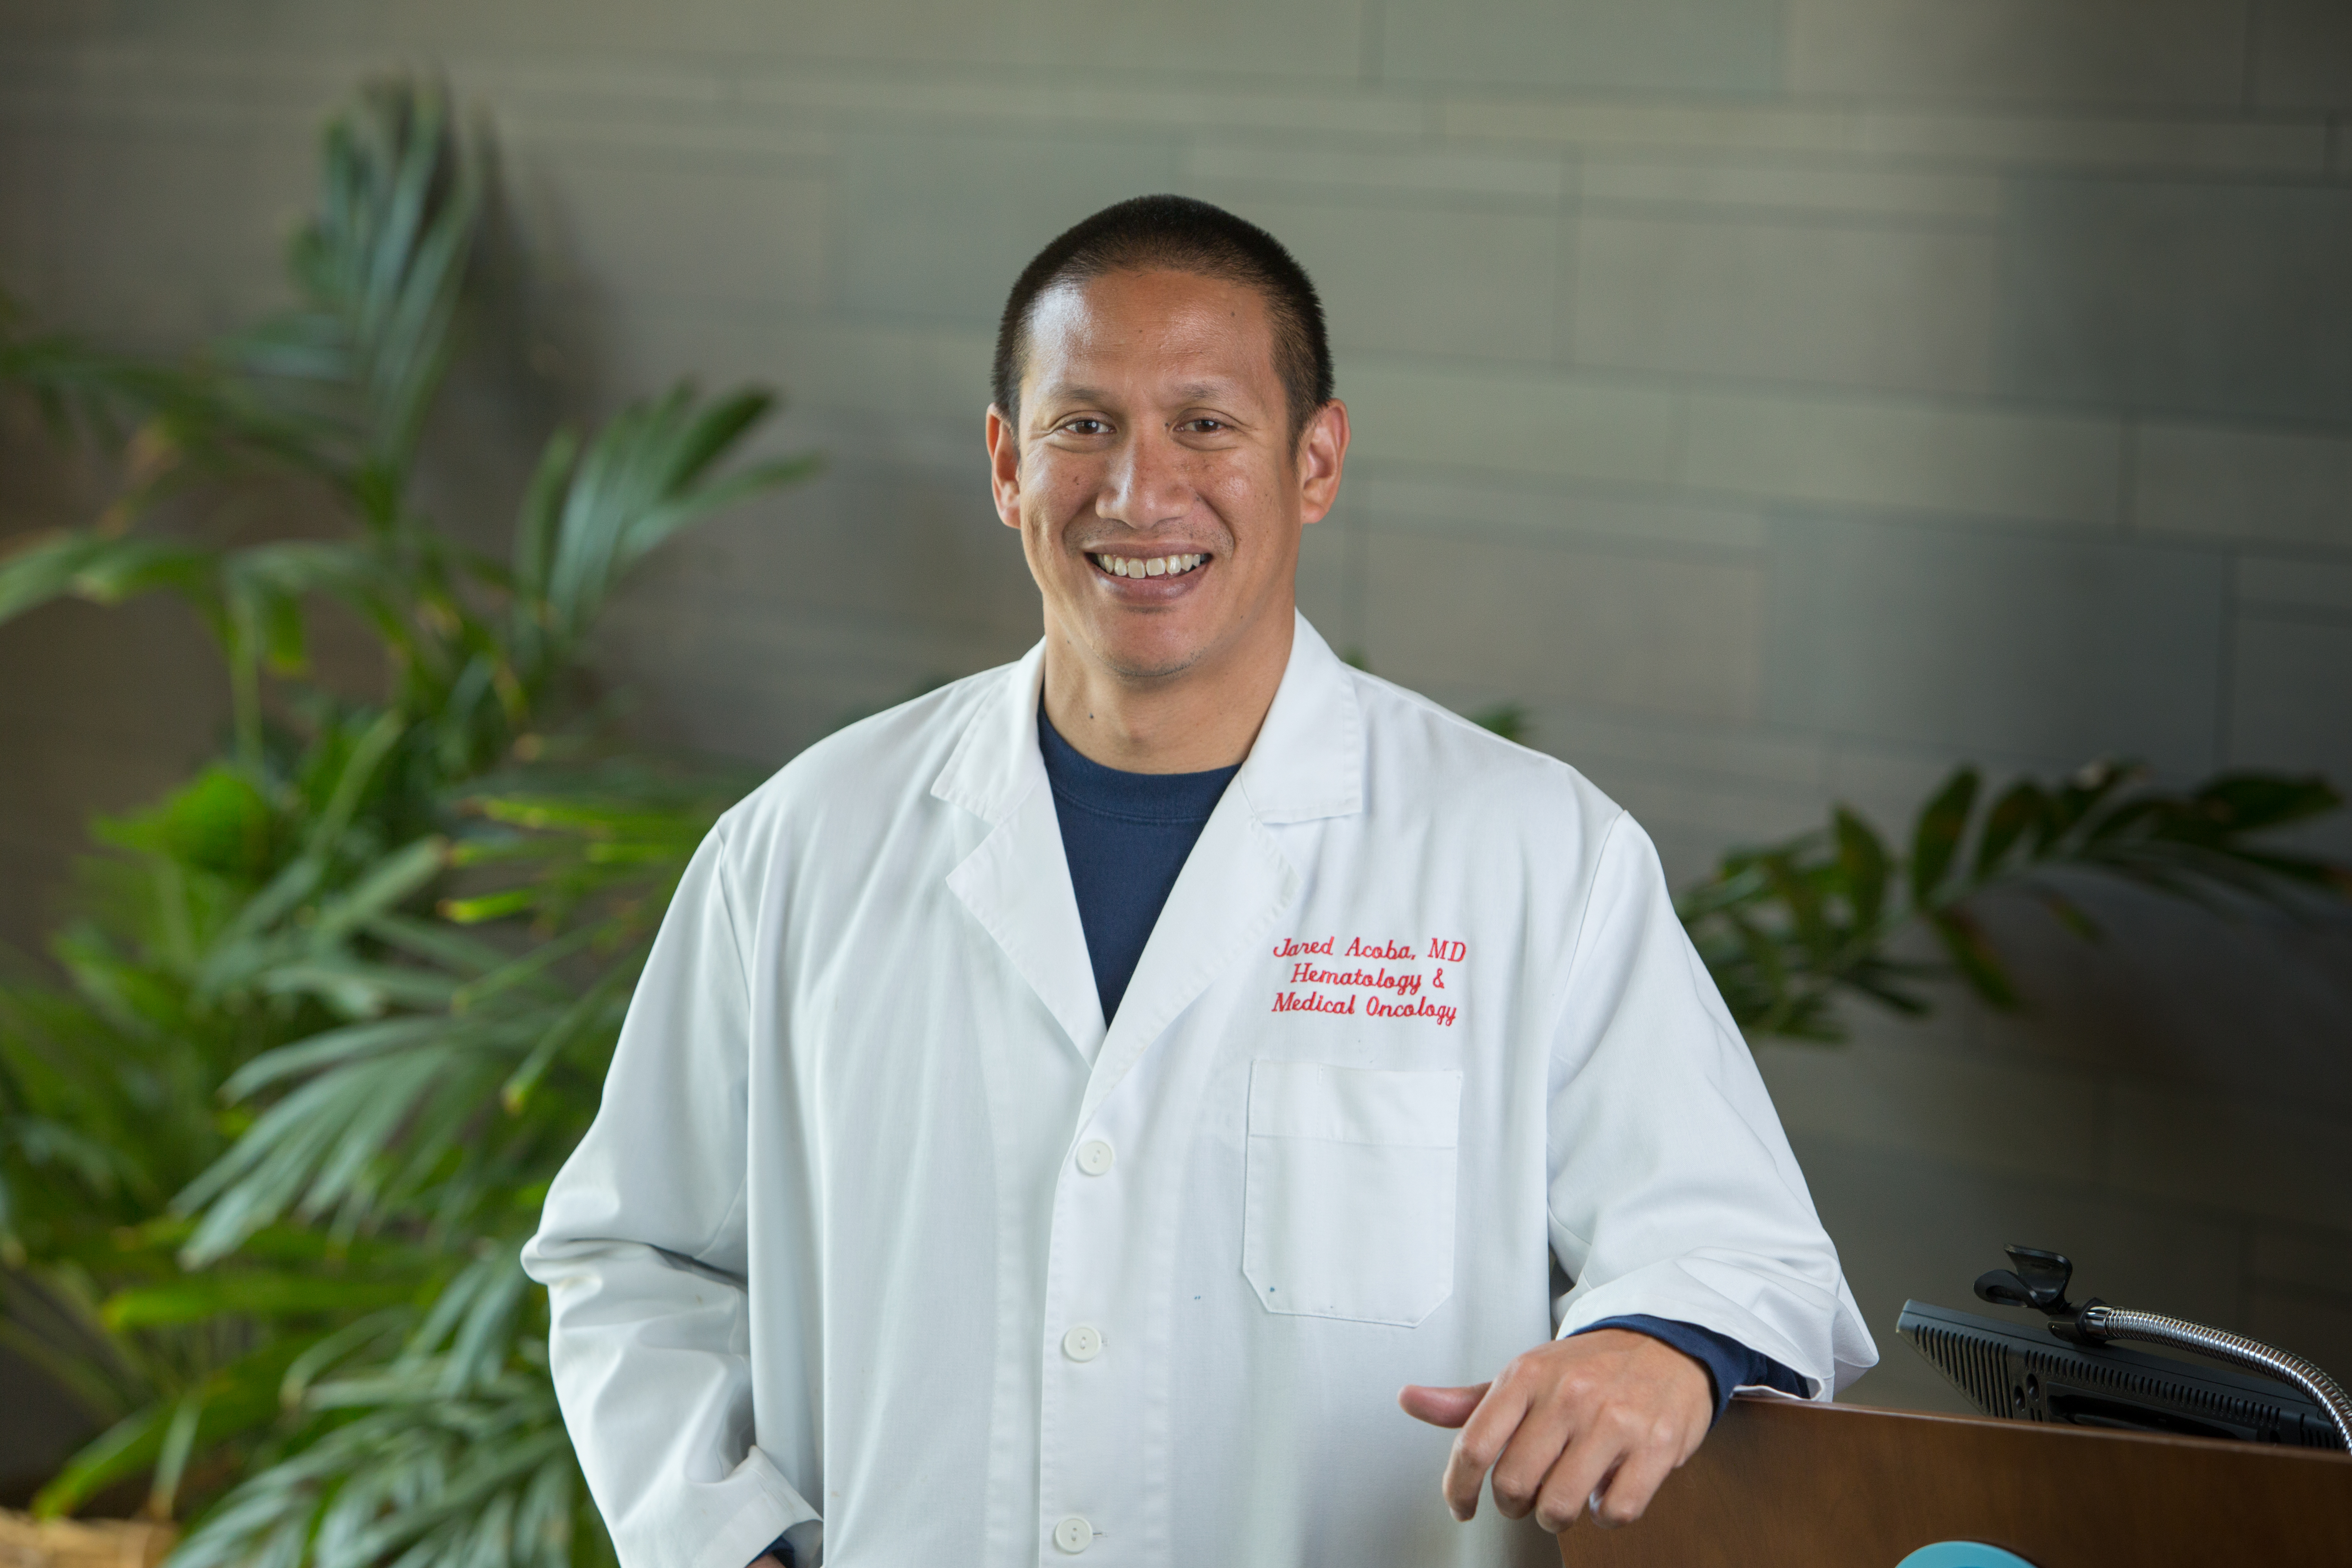 Ross L. Levine, MD - MSK Leukemia Specialist & Physician-Scientist